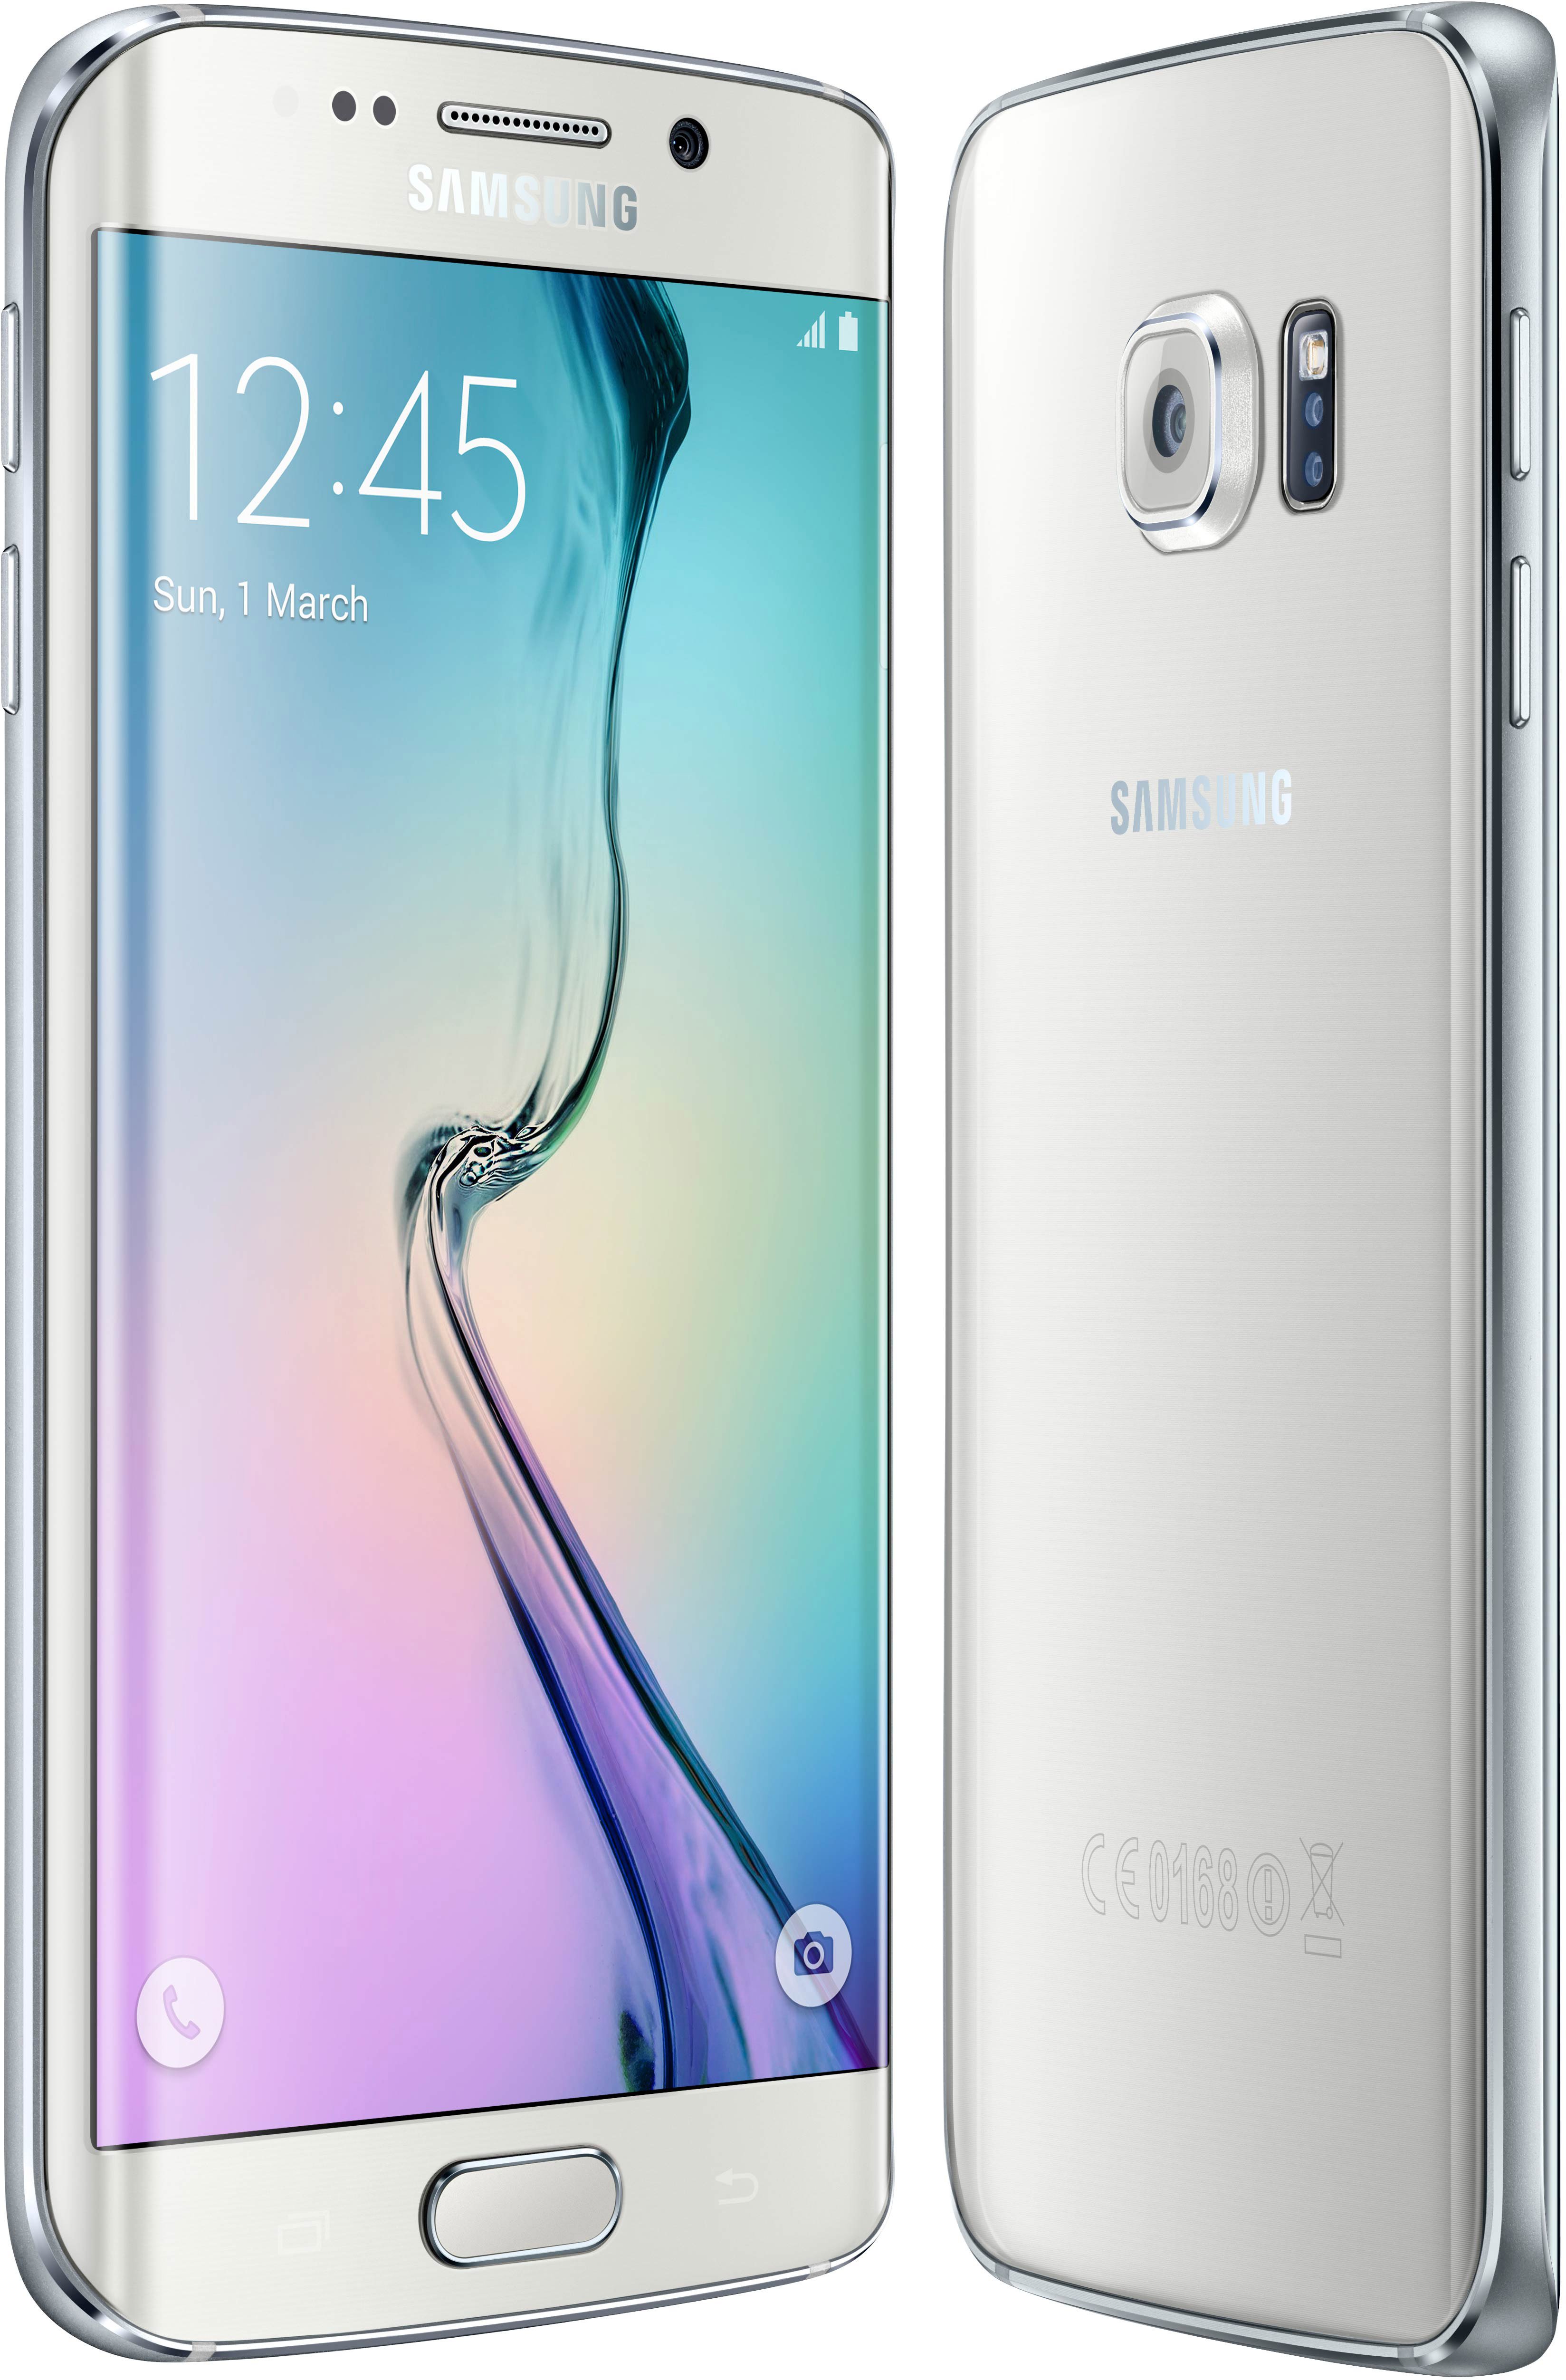 Самсунг новый недорого. Samsung Galaxy s6. Самсунг галакси s6 Edge. Samsung Galaxy 6 Edge. Samsung Galaxy s6 Edge 32gb.